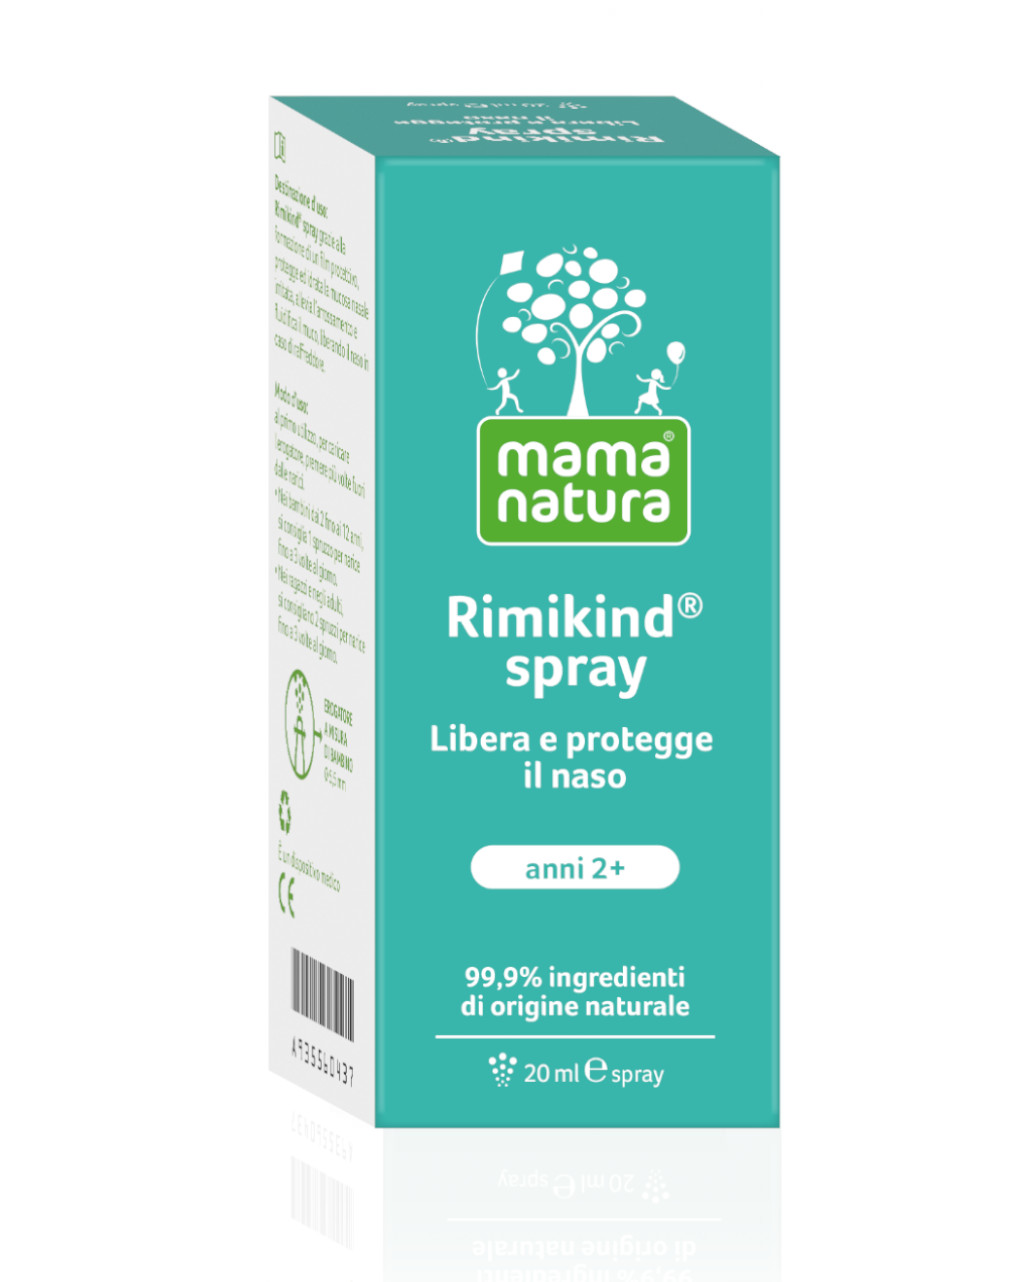 Rimikind spray schwabe - mama natura - MAMA NATURA